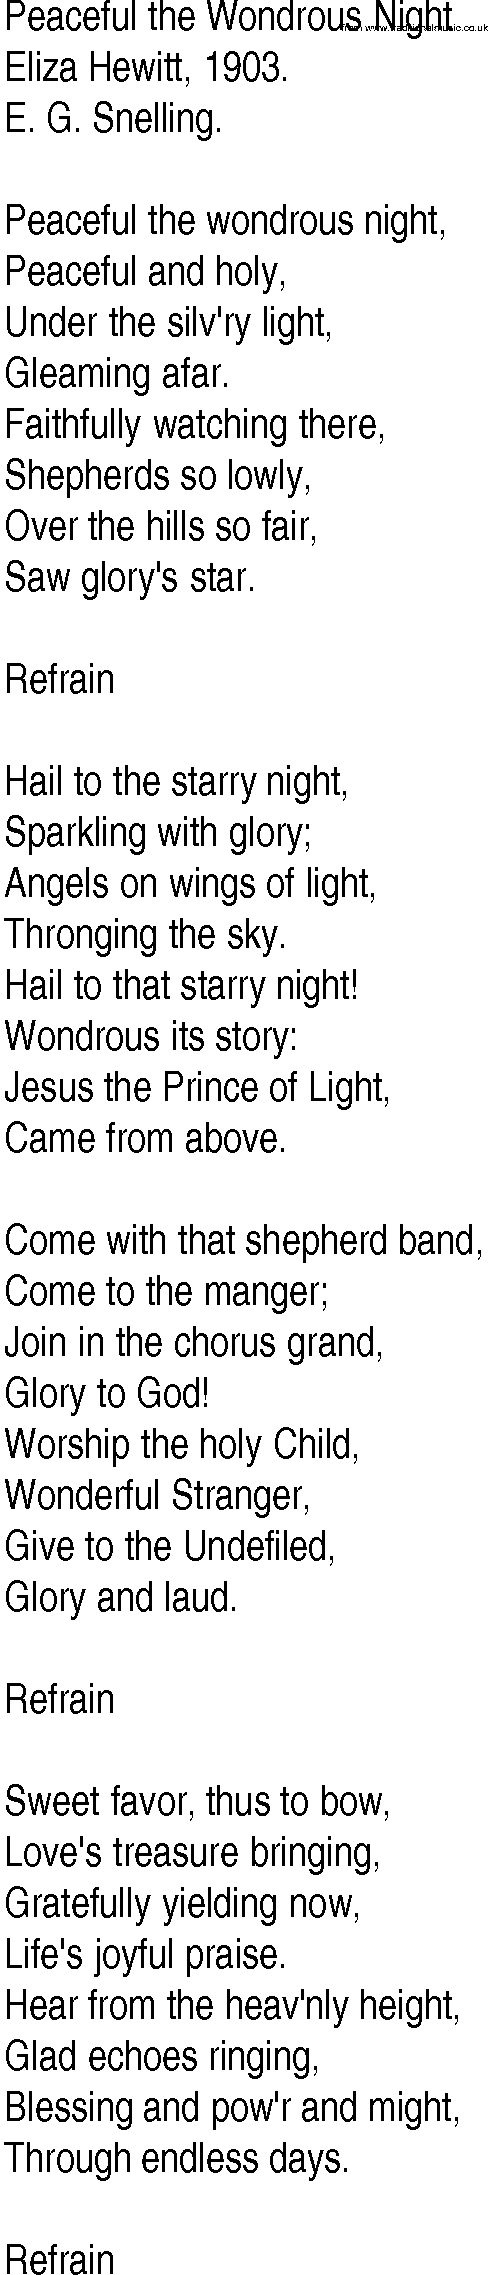 Hymn and Gospel Song: Peaceful the Wondrous Night by Eliza Hewitt lyrics